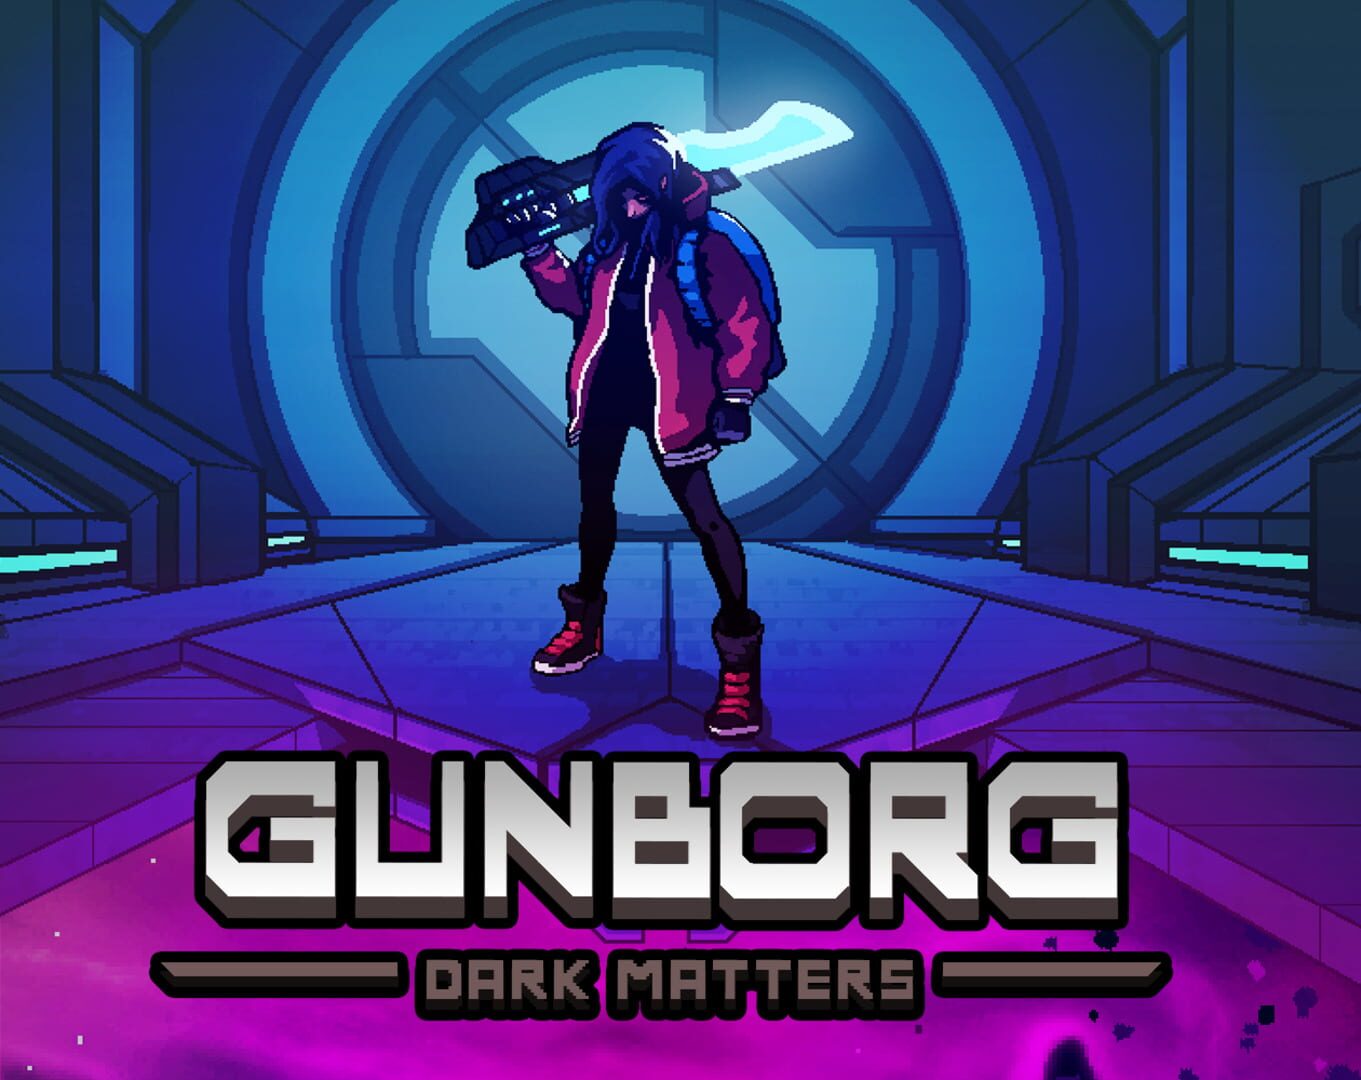 Gunborg: Dark Matters artwork